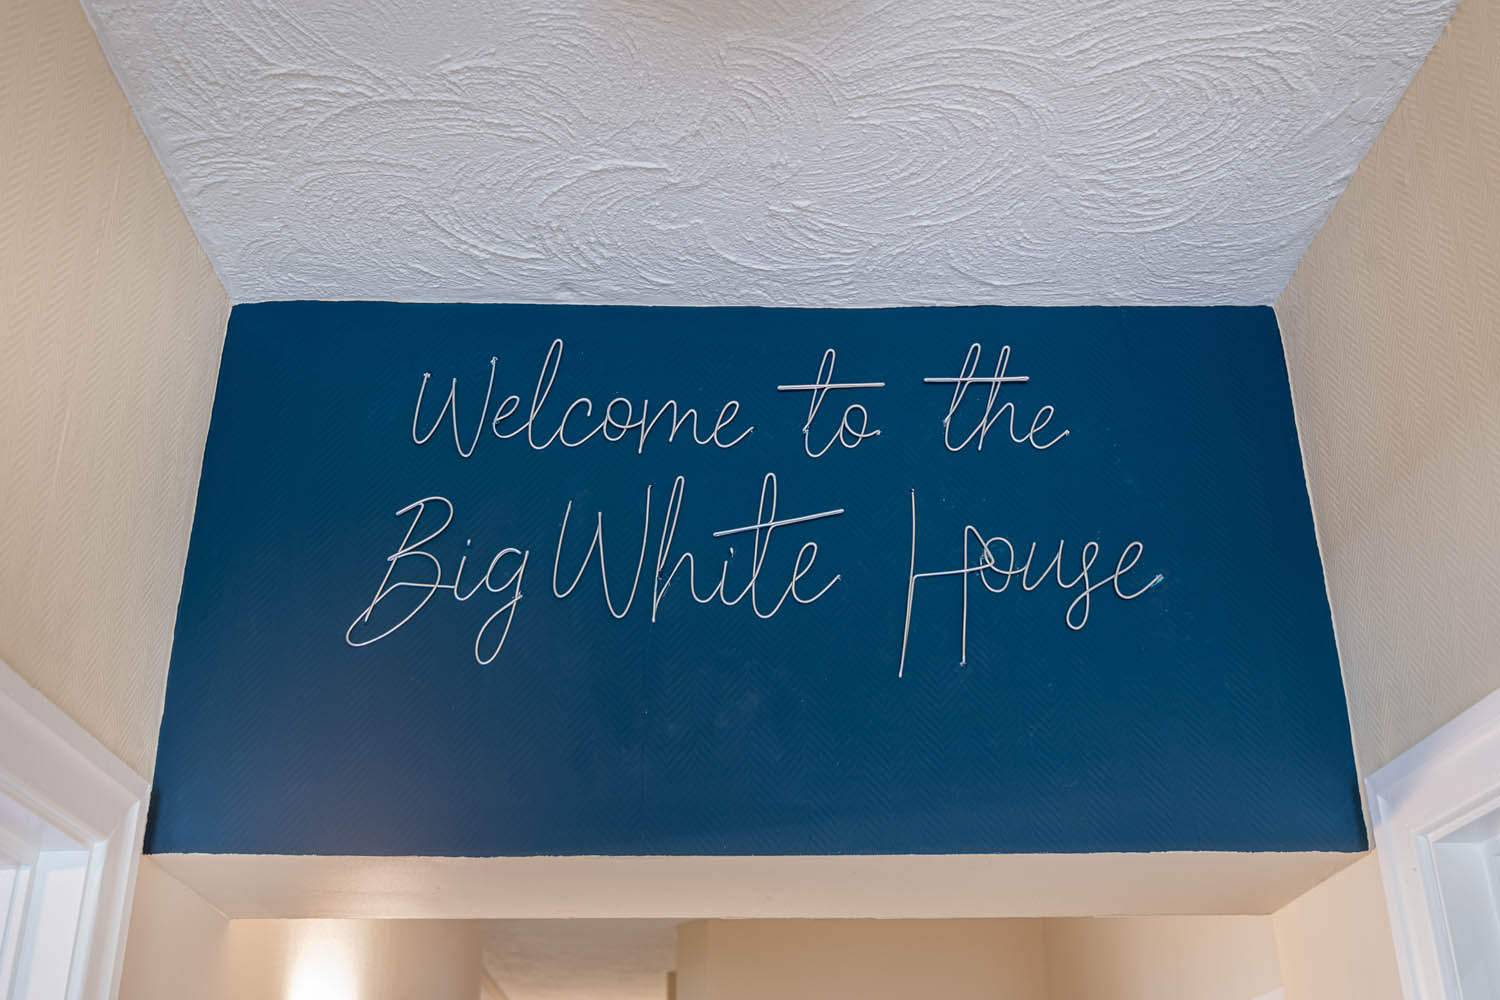 Big White House, Lake District Group Accommodation